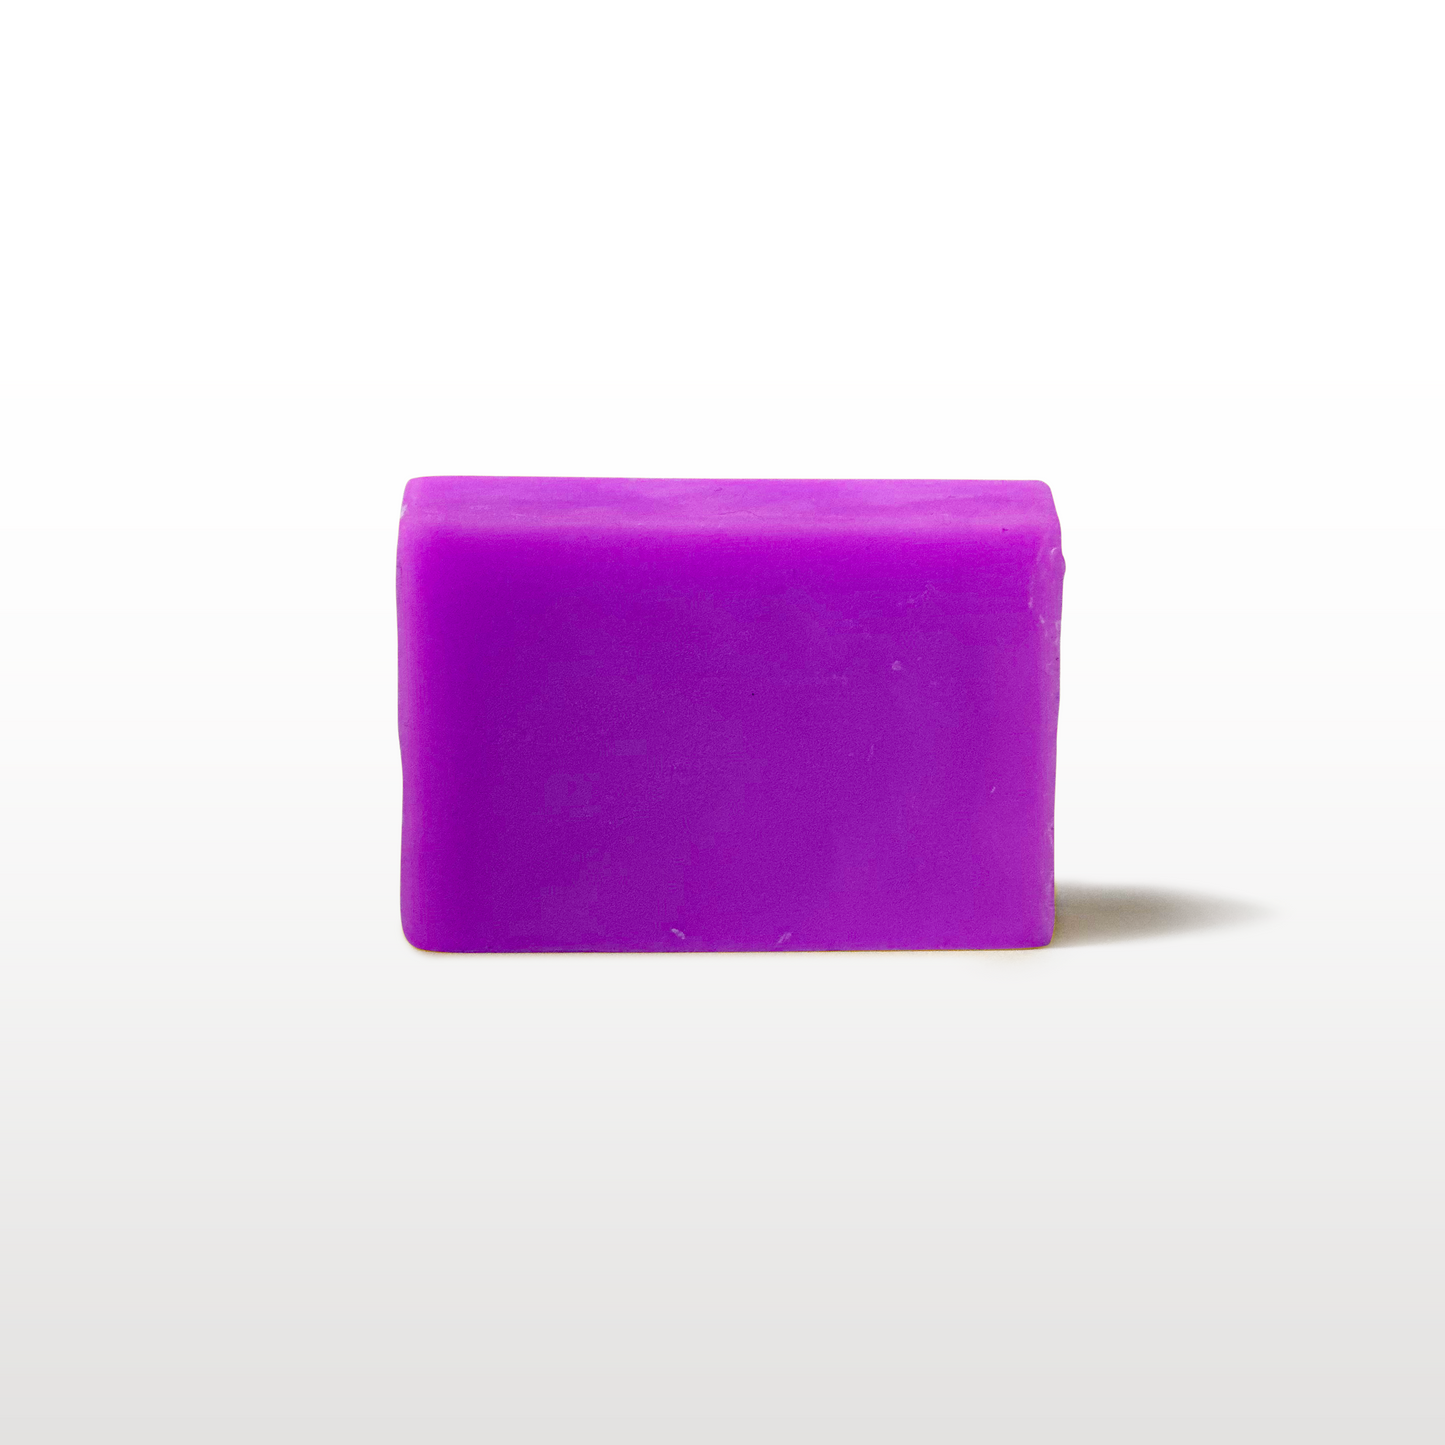 A bar of purple wax